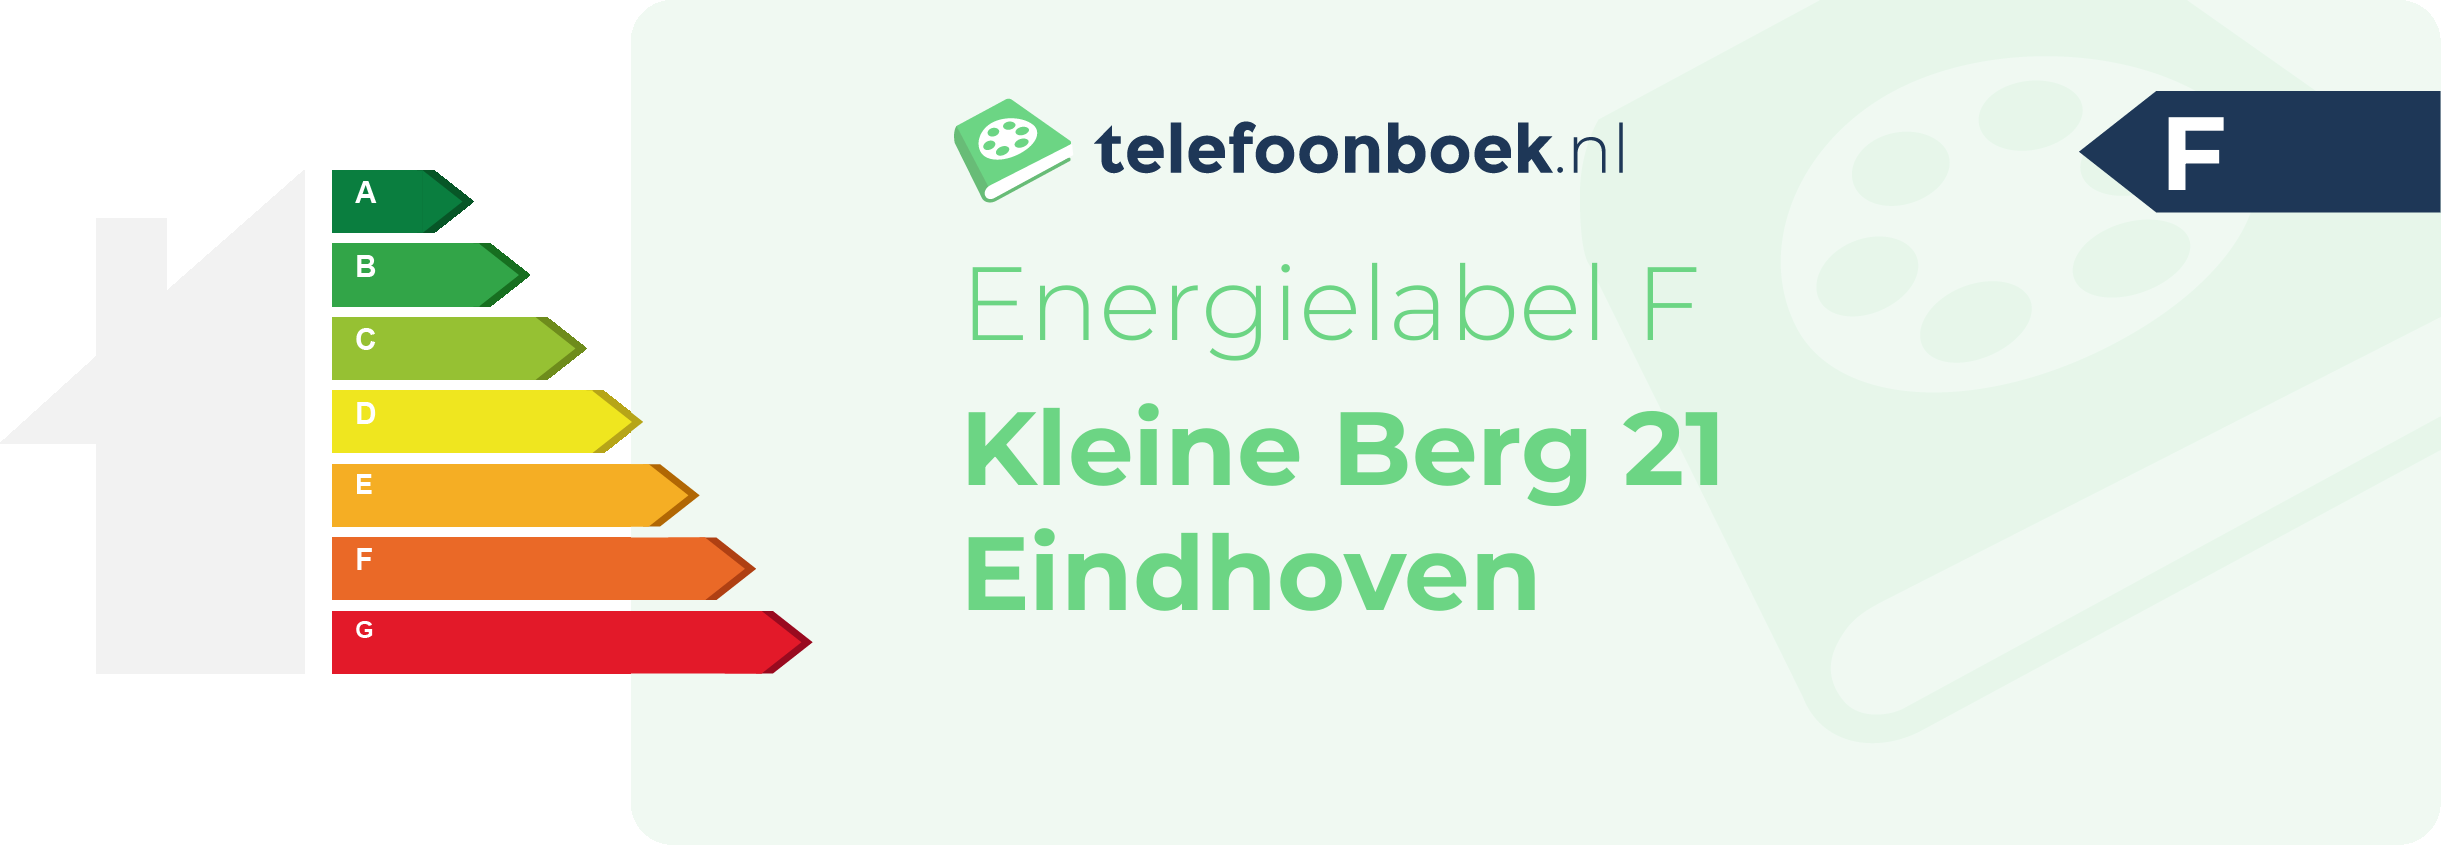 Energielabel Kleine Berg 21 Eindhoven